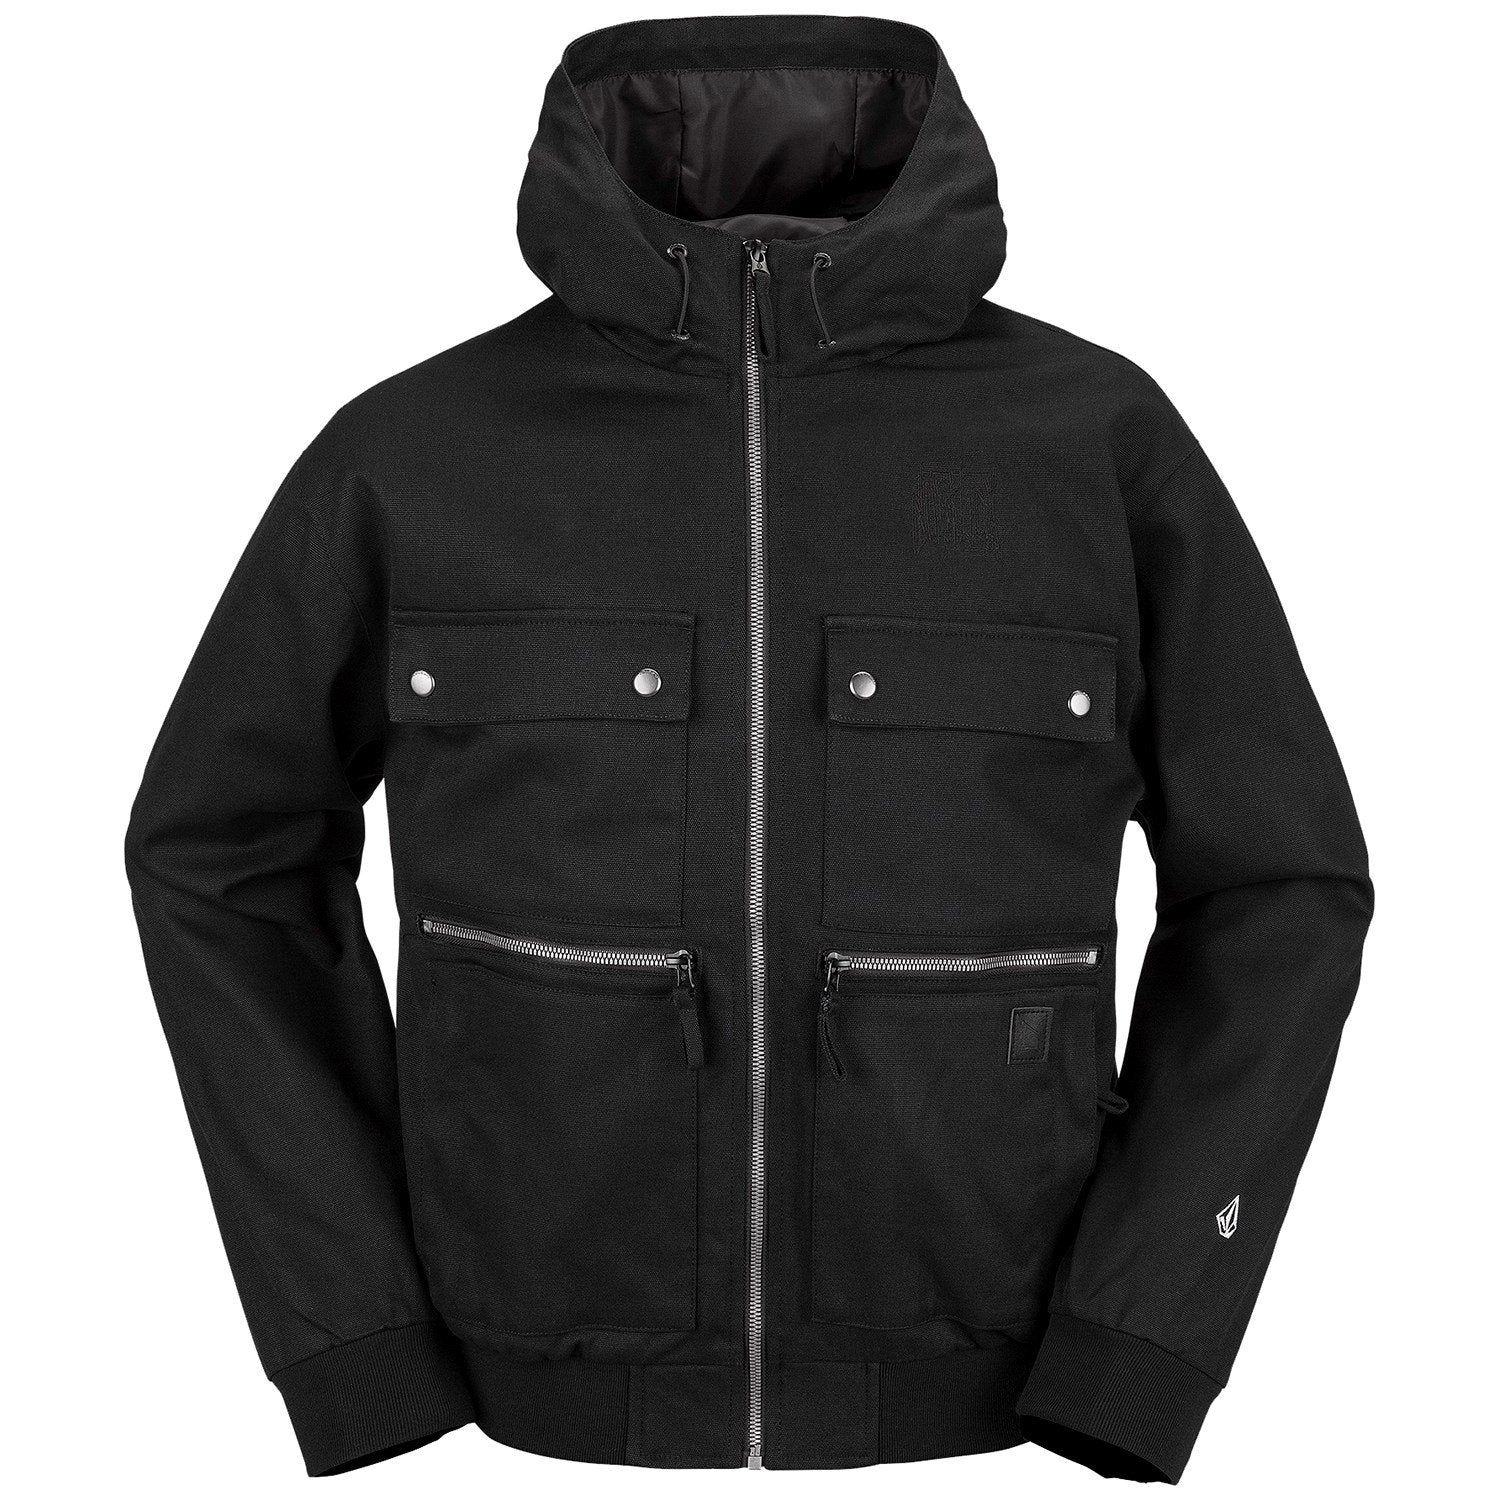 Black Dustbox Volcom Snowboard Jacket